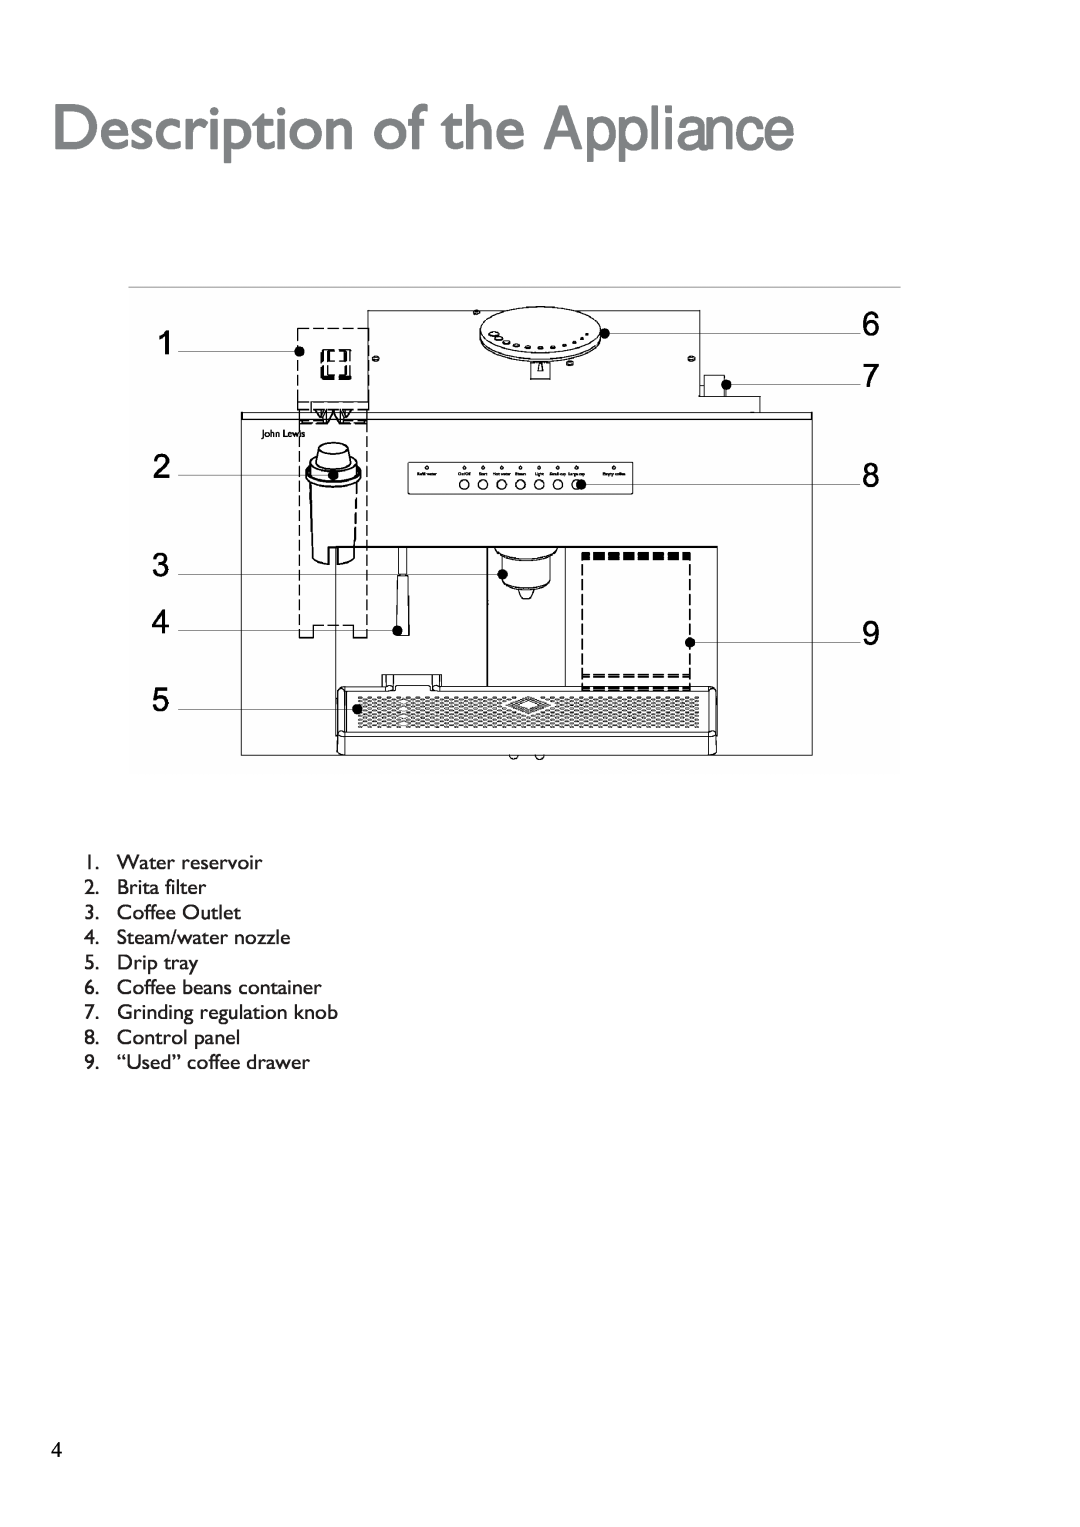 John Lewis JLBICM 01 instruction manual Description of the Appliance, Water reservoir 2. Brita filter 3. Coffee Outlet 